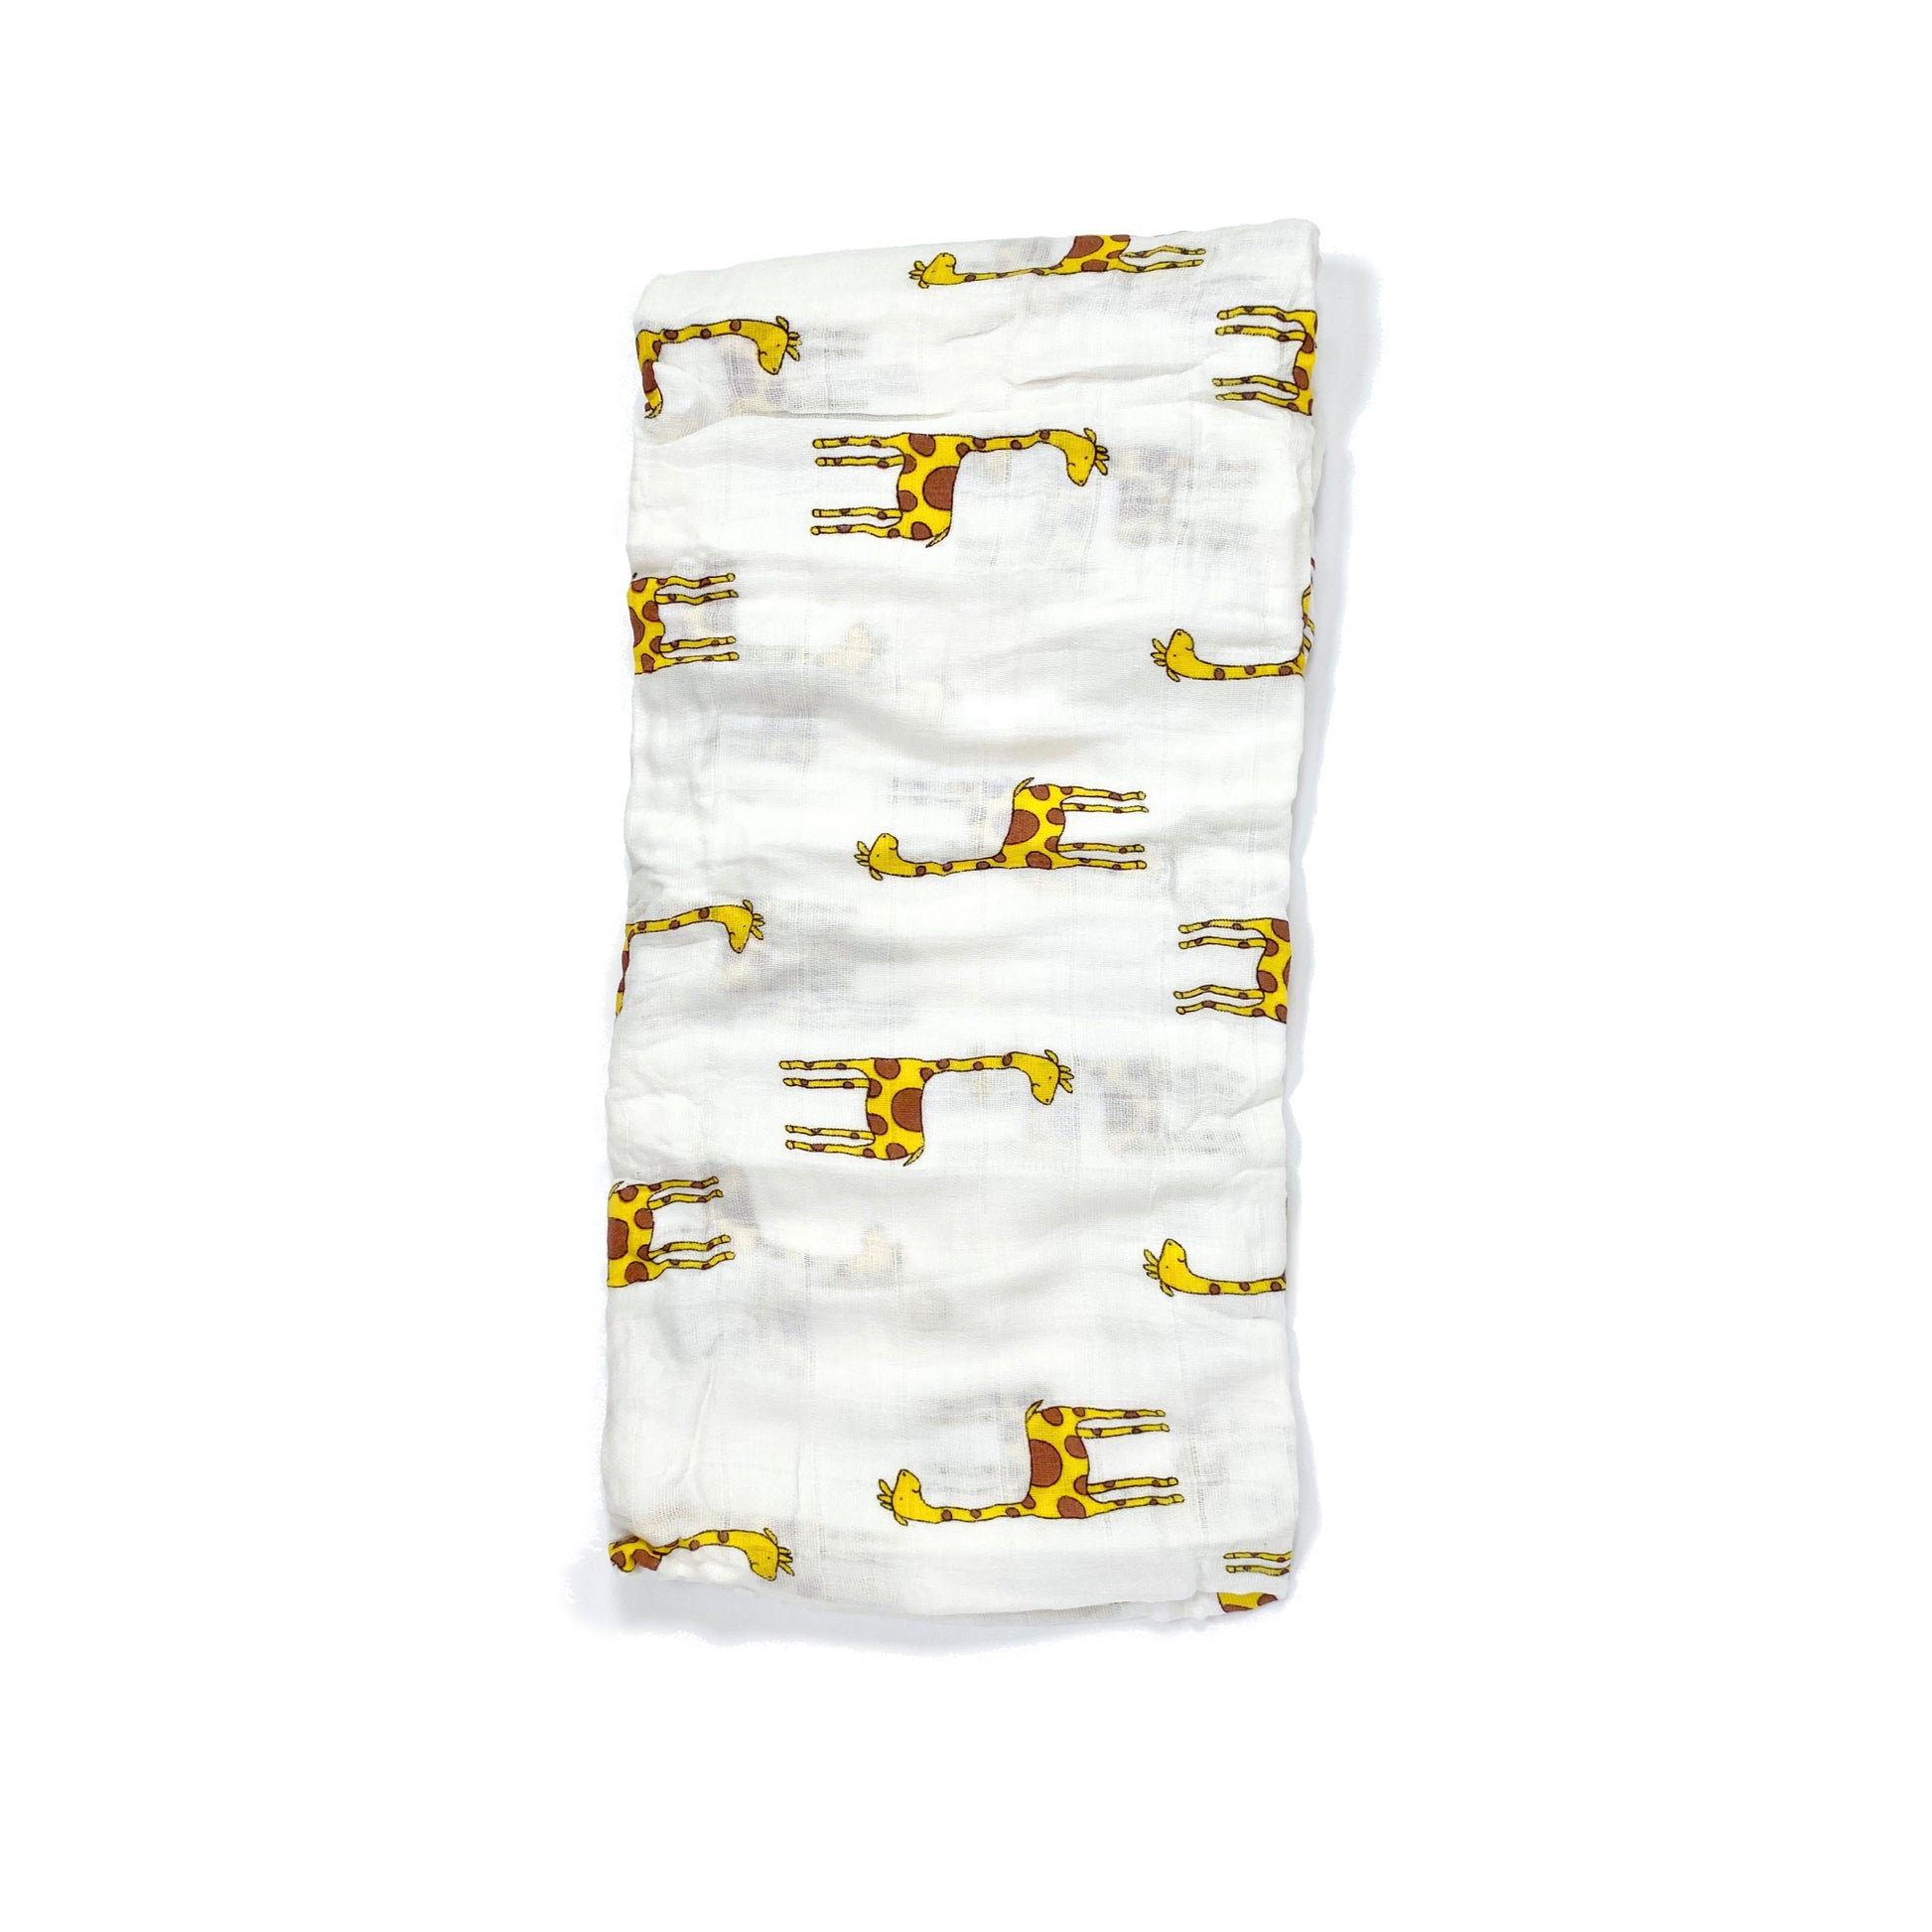 A folded muslin swaddle blanket with a giraffe design.